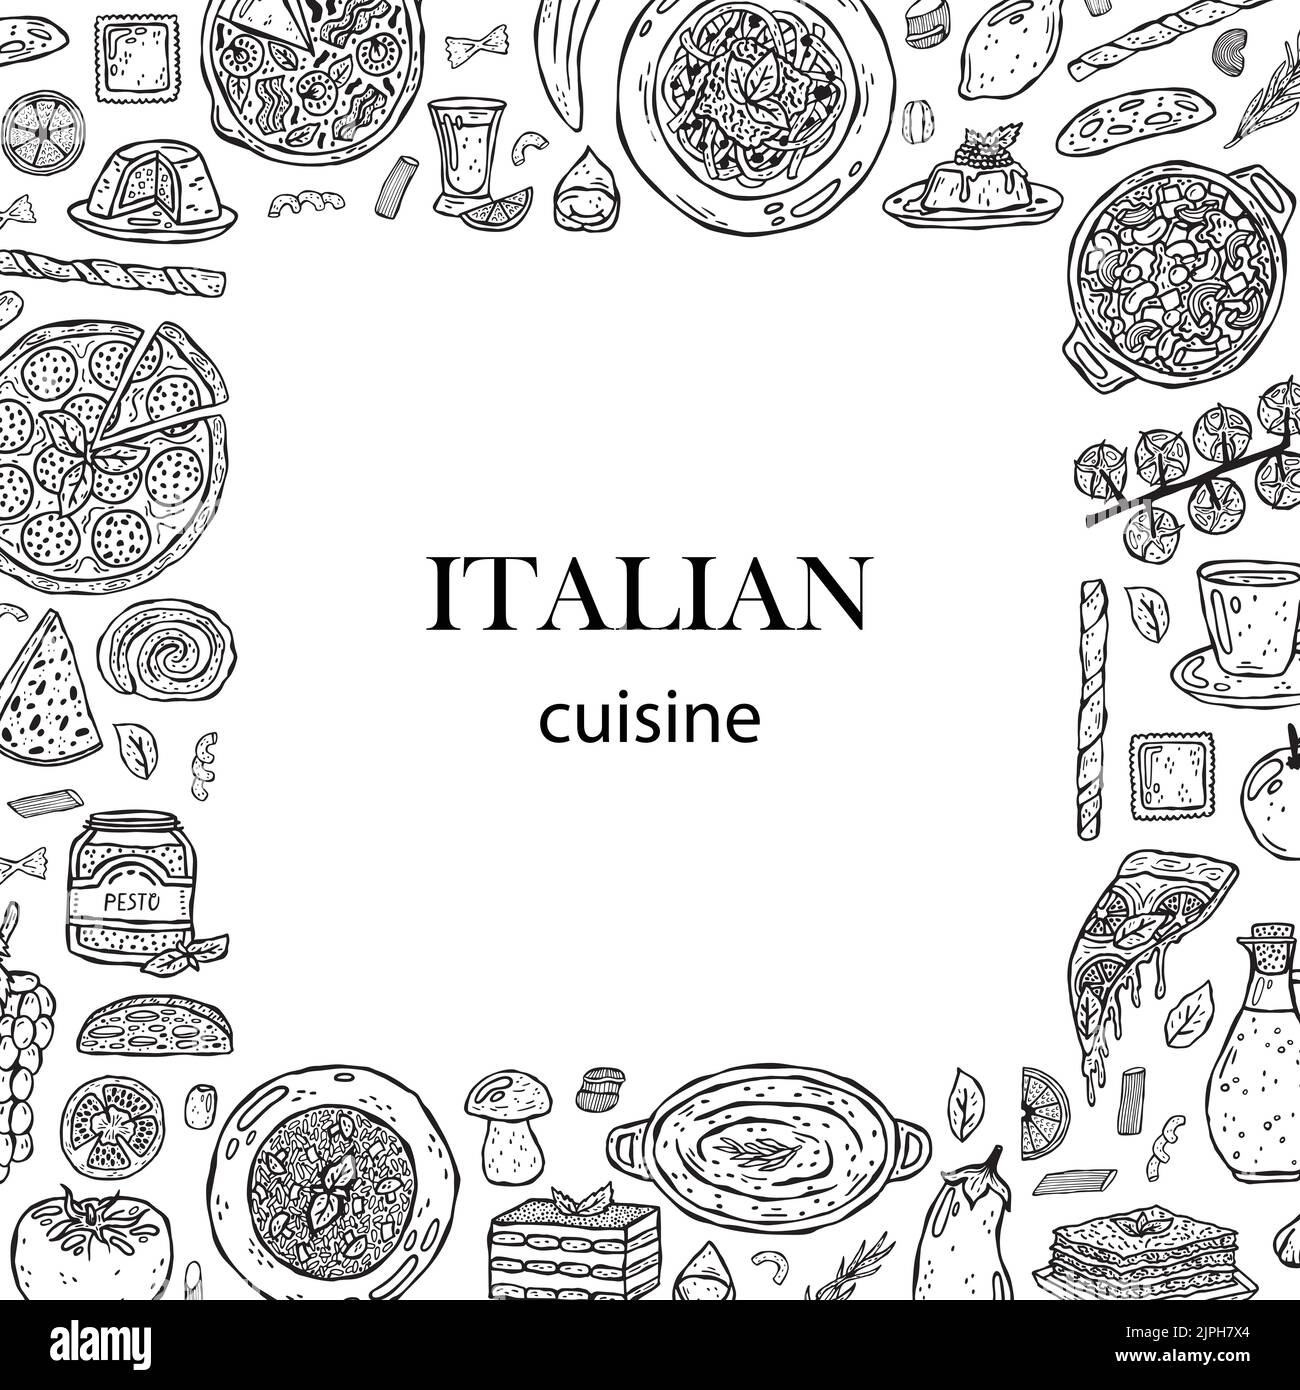 Vector template hand-drawn illustrations of Italian cuisine. Stock Vector